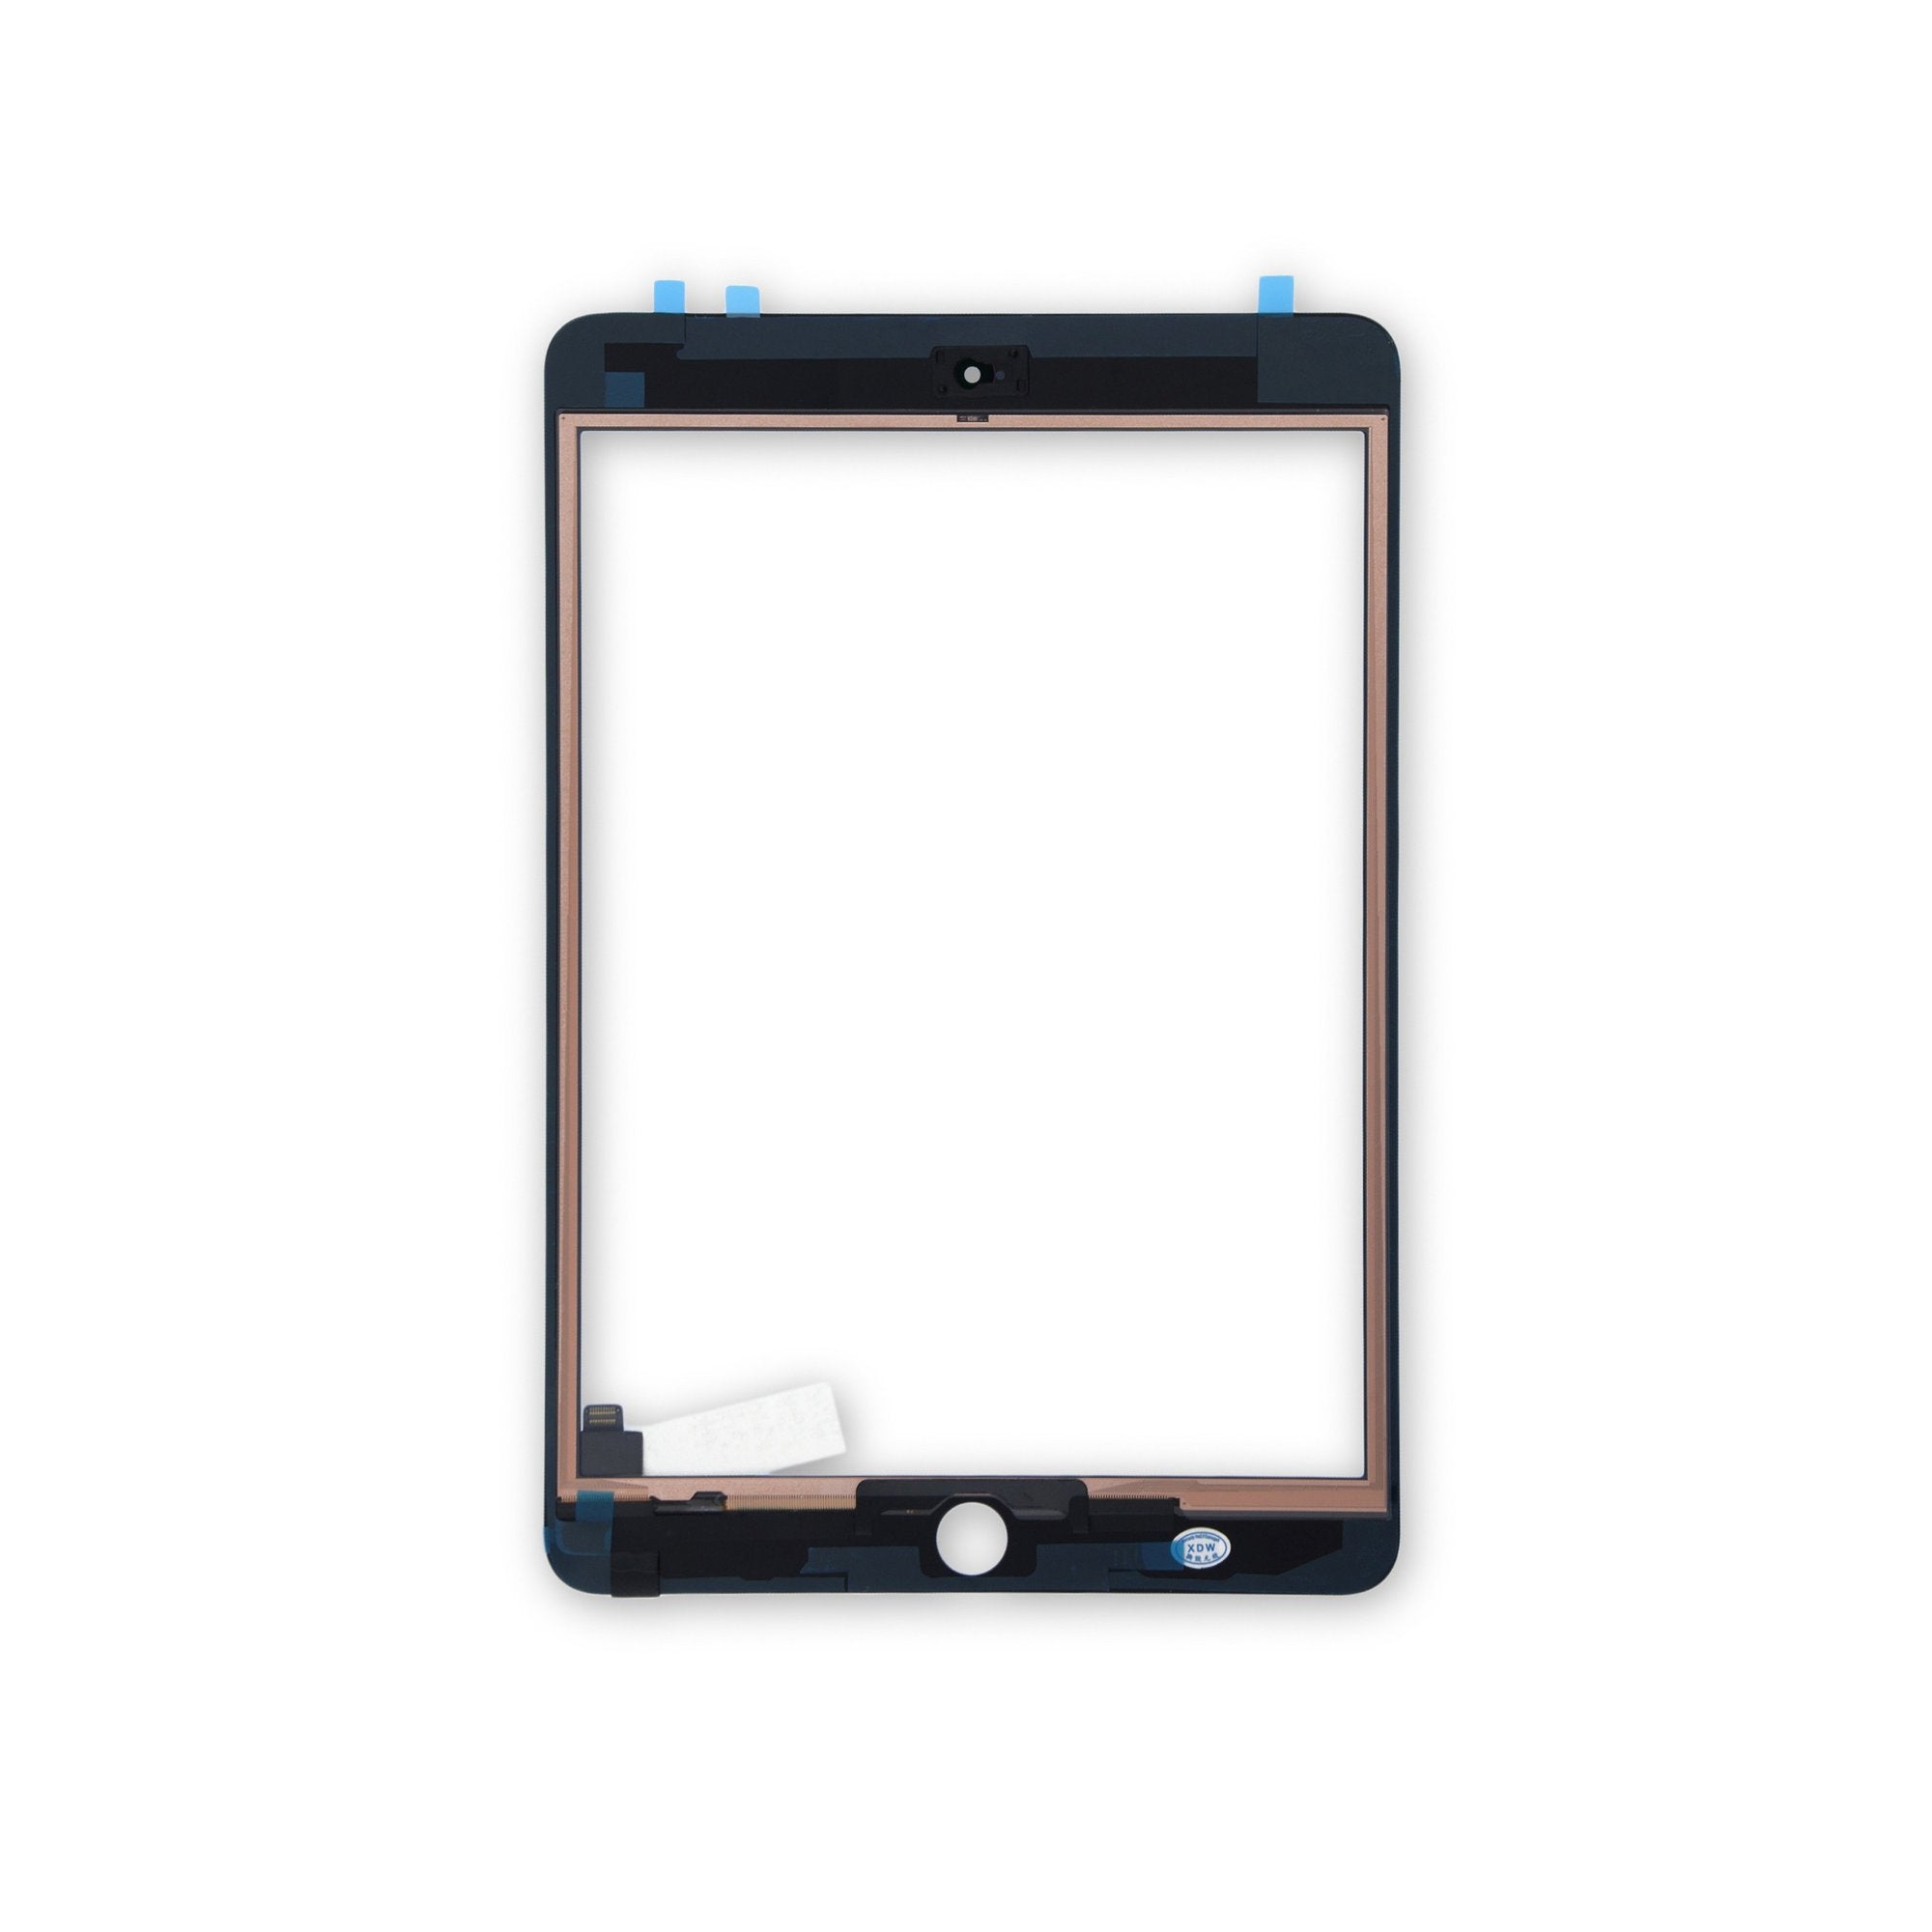 iPad mini 3 Screen Digitizer Black New Part Only